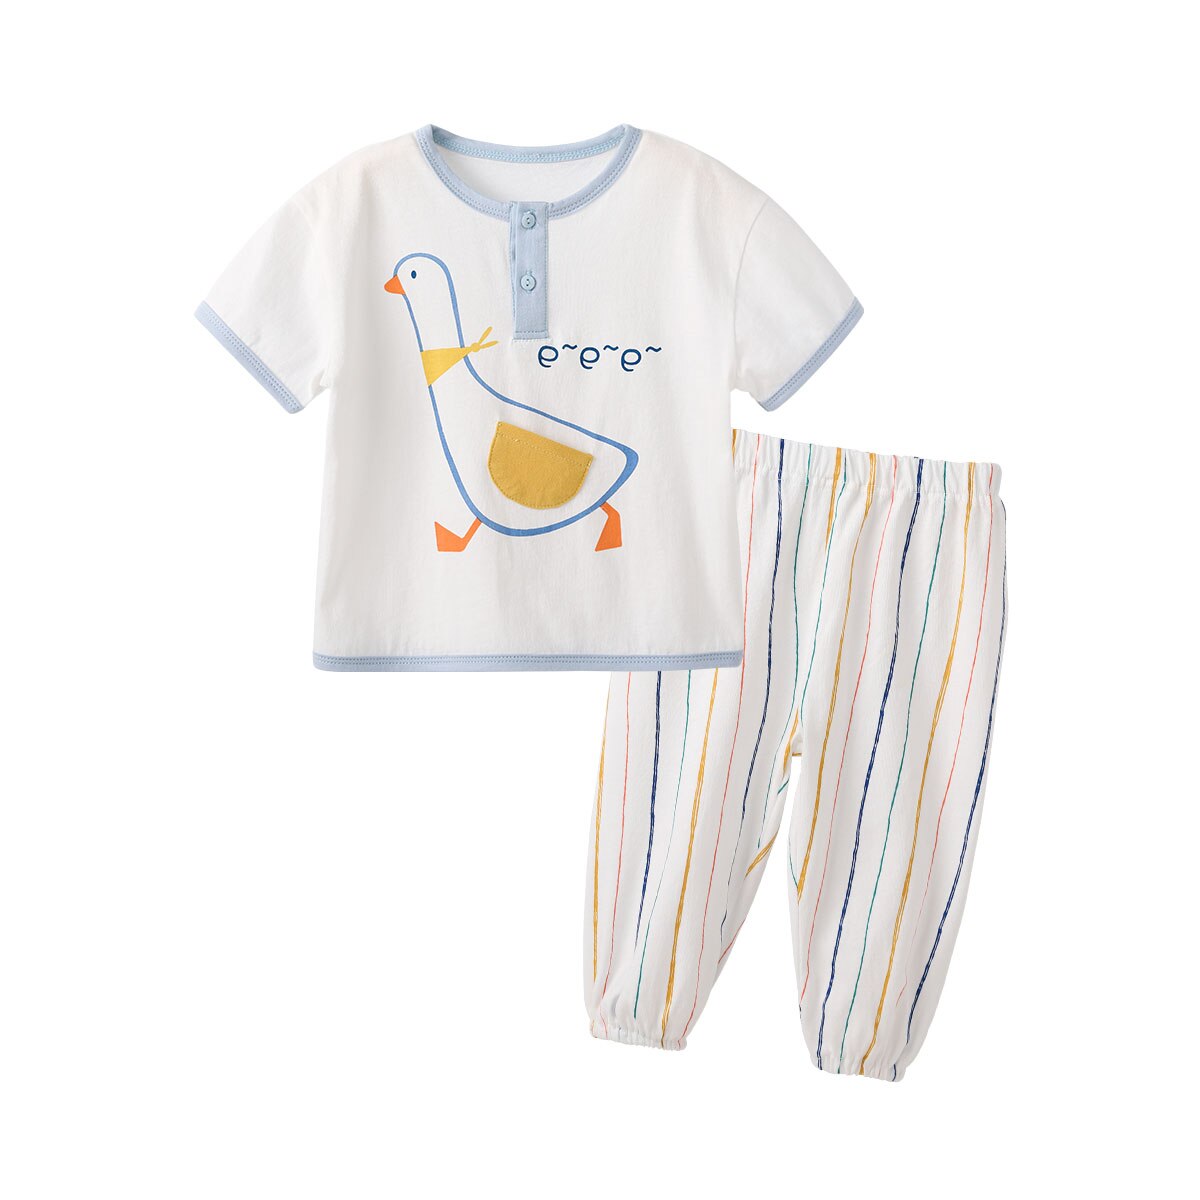 Toddler Unisex 2 Pack Clothing Set Short Sleeve Cotton Baby Pajamas Cartoon Baby Sleepwear Summer Baby Boy Girl Clothes